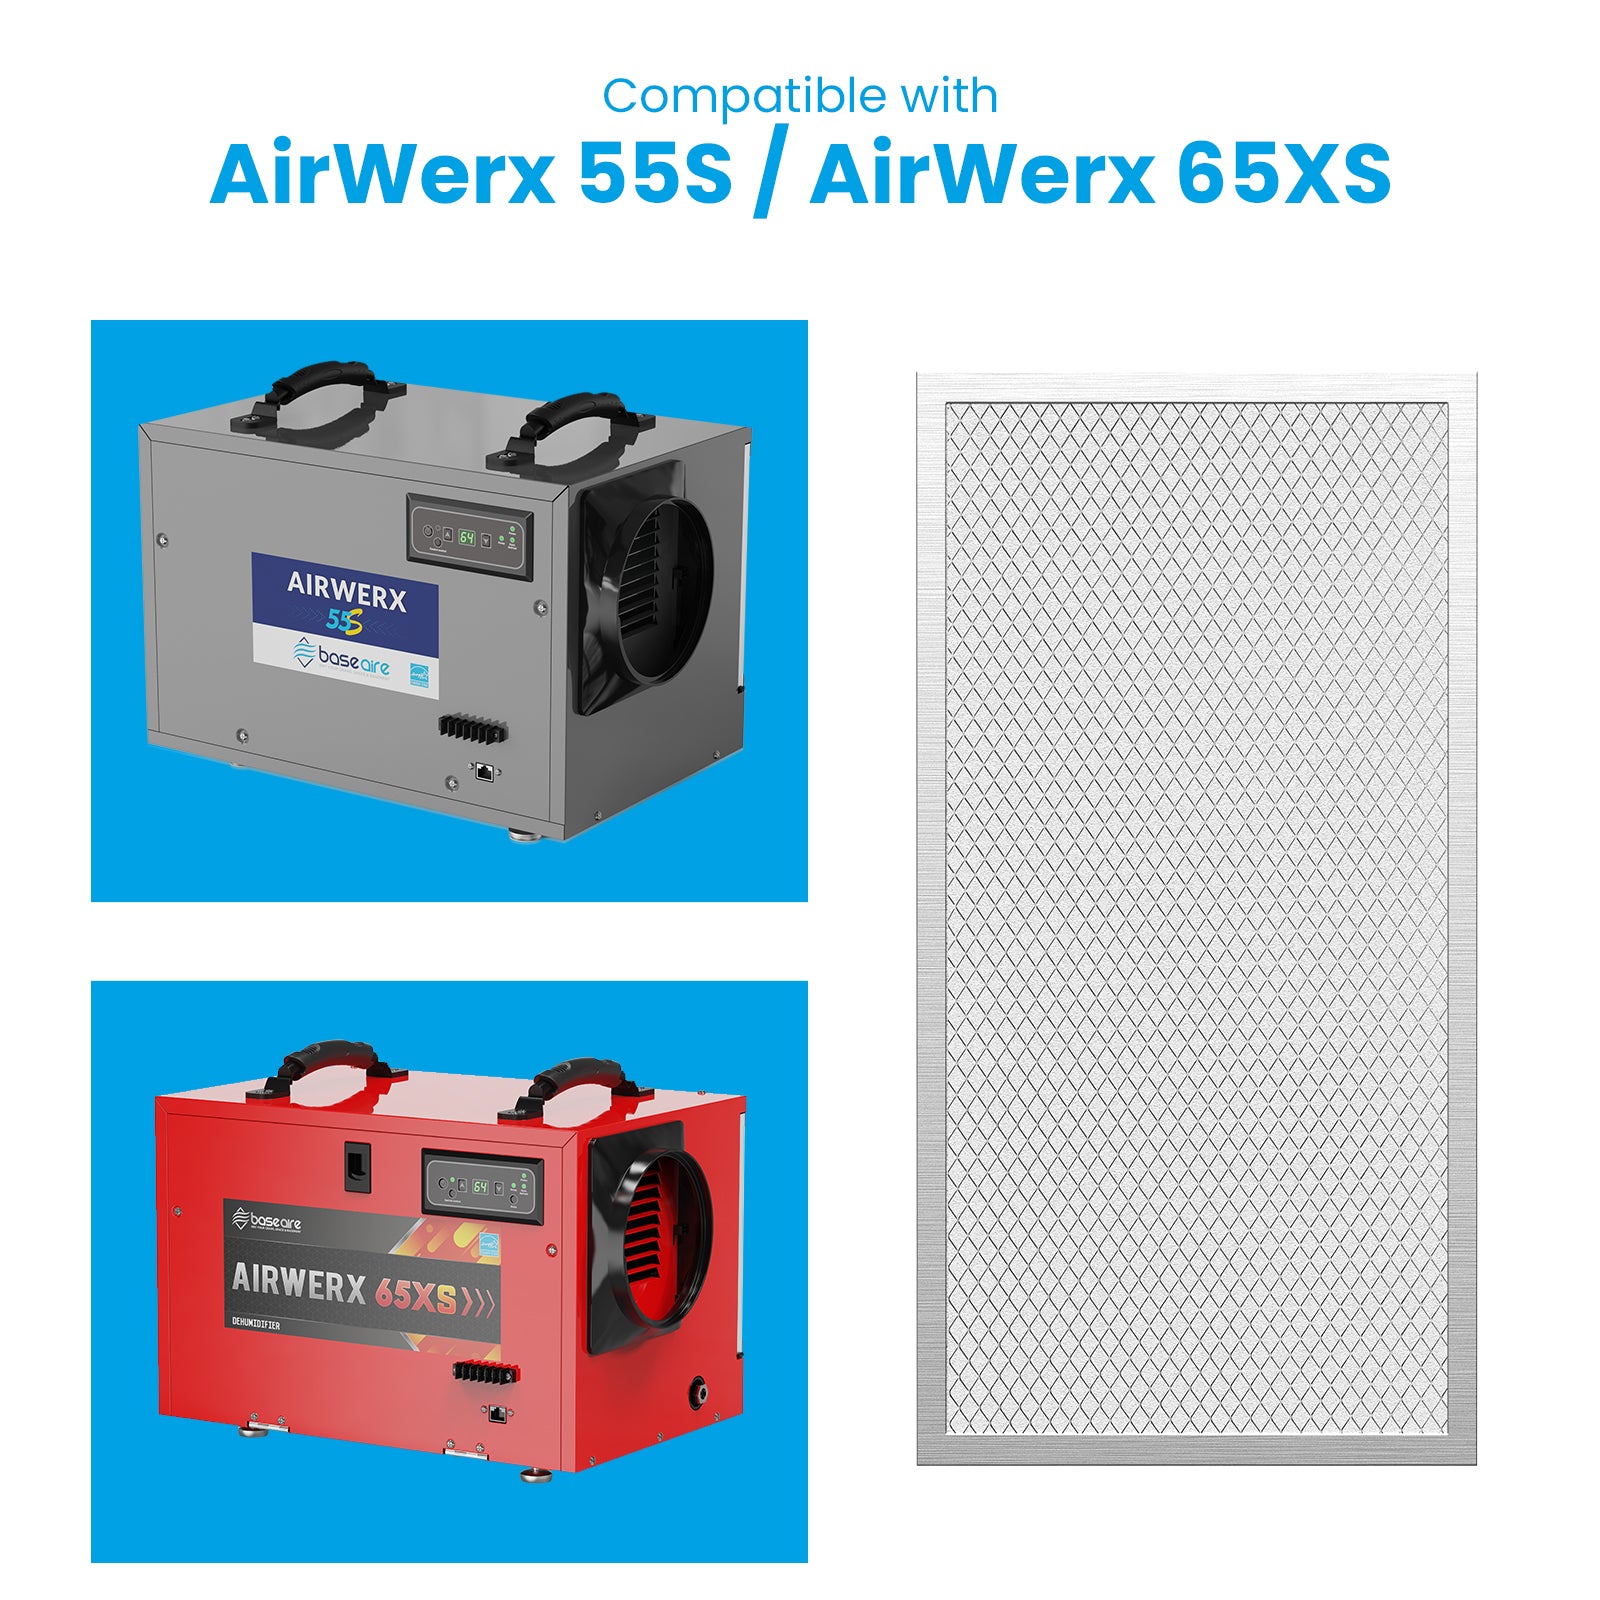 BaseAire 1 Pack Merv-8 Filter for Airwerx55S, Airwerx65XS